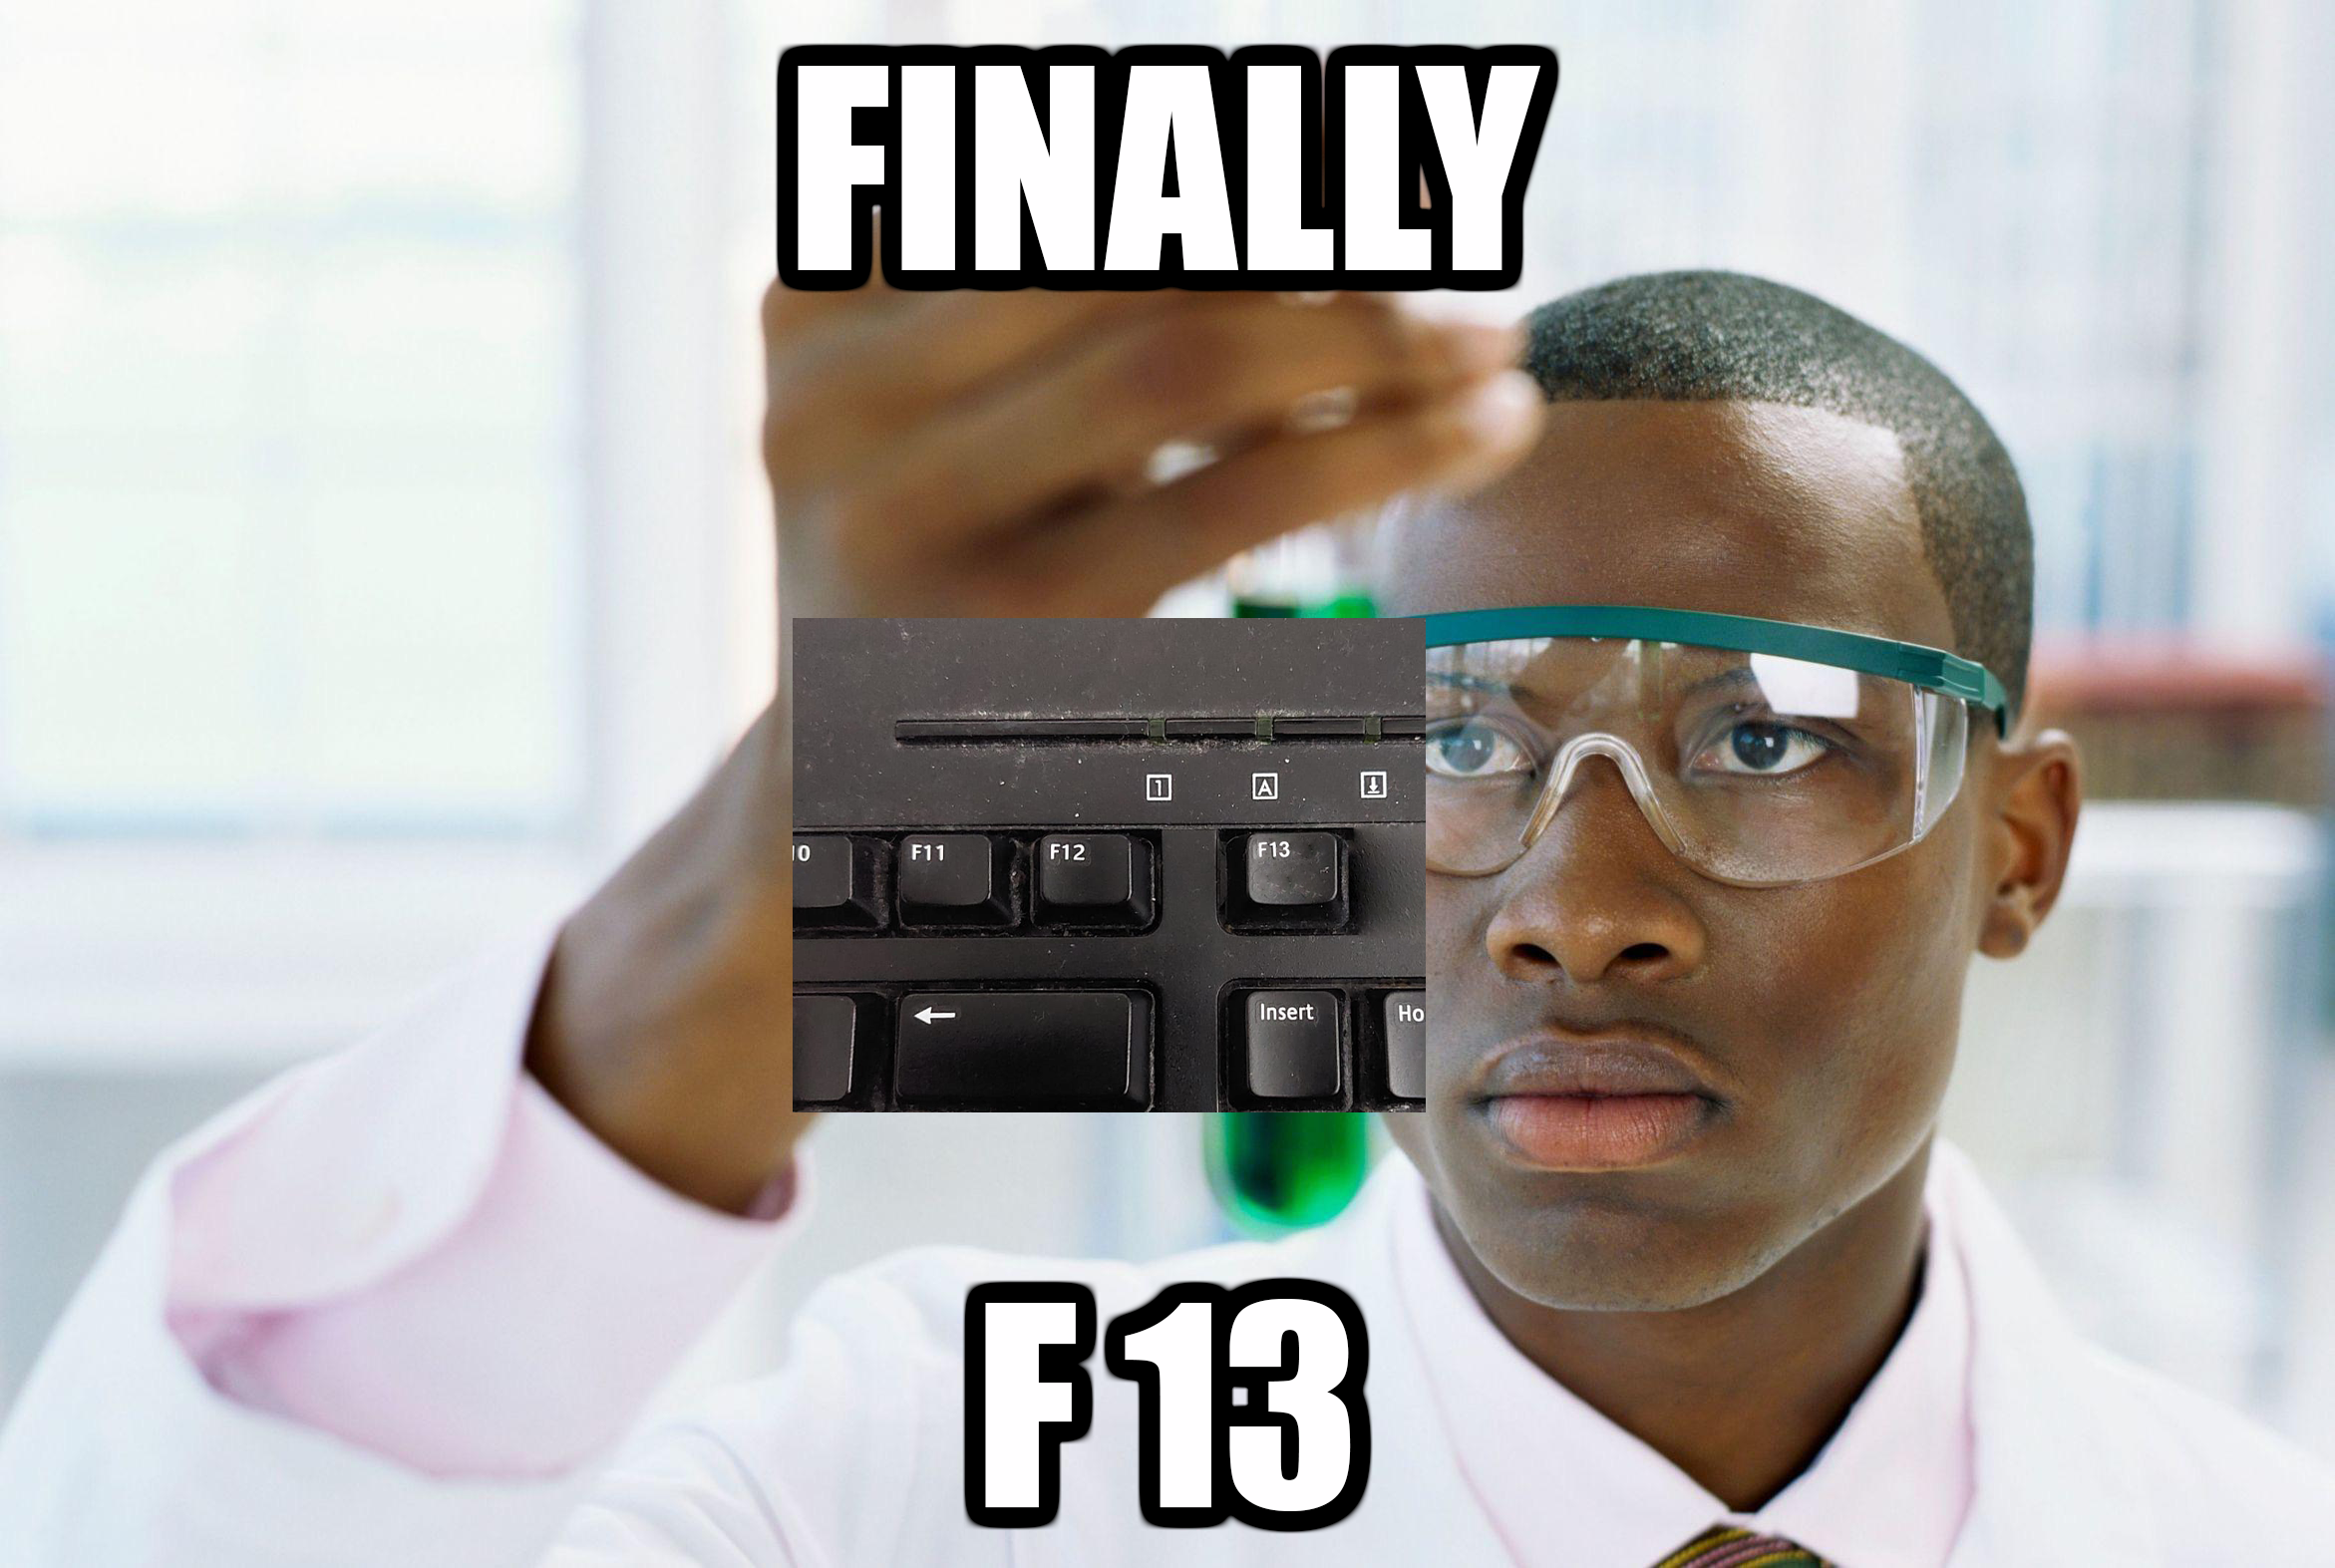 funny gaming memes - finally synthetic watermelon - Finally B F 712 mert via F13